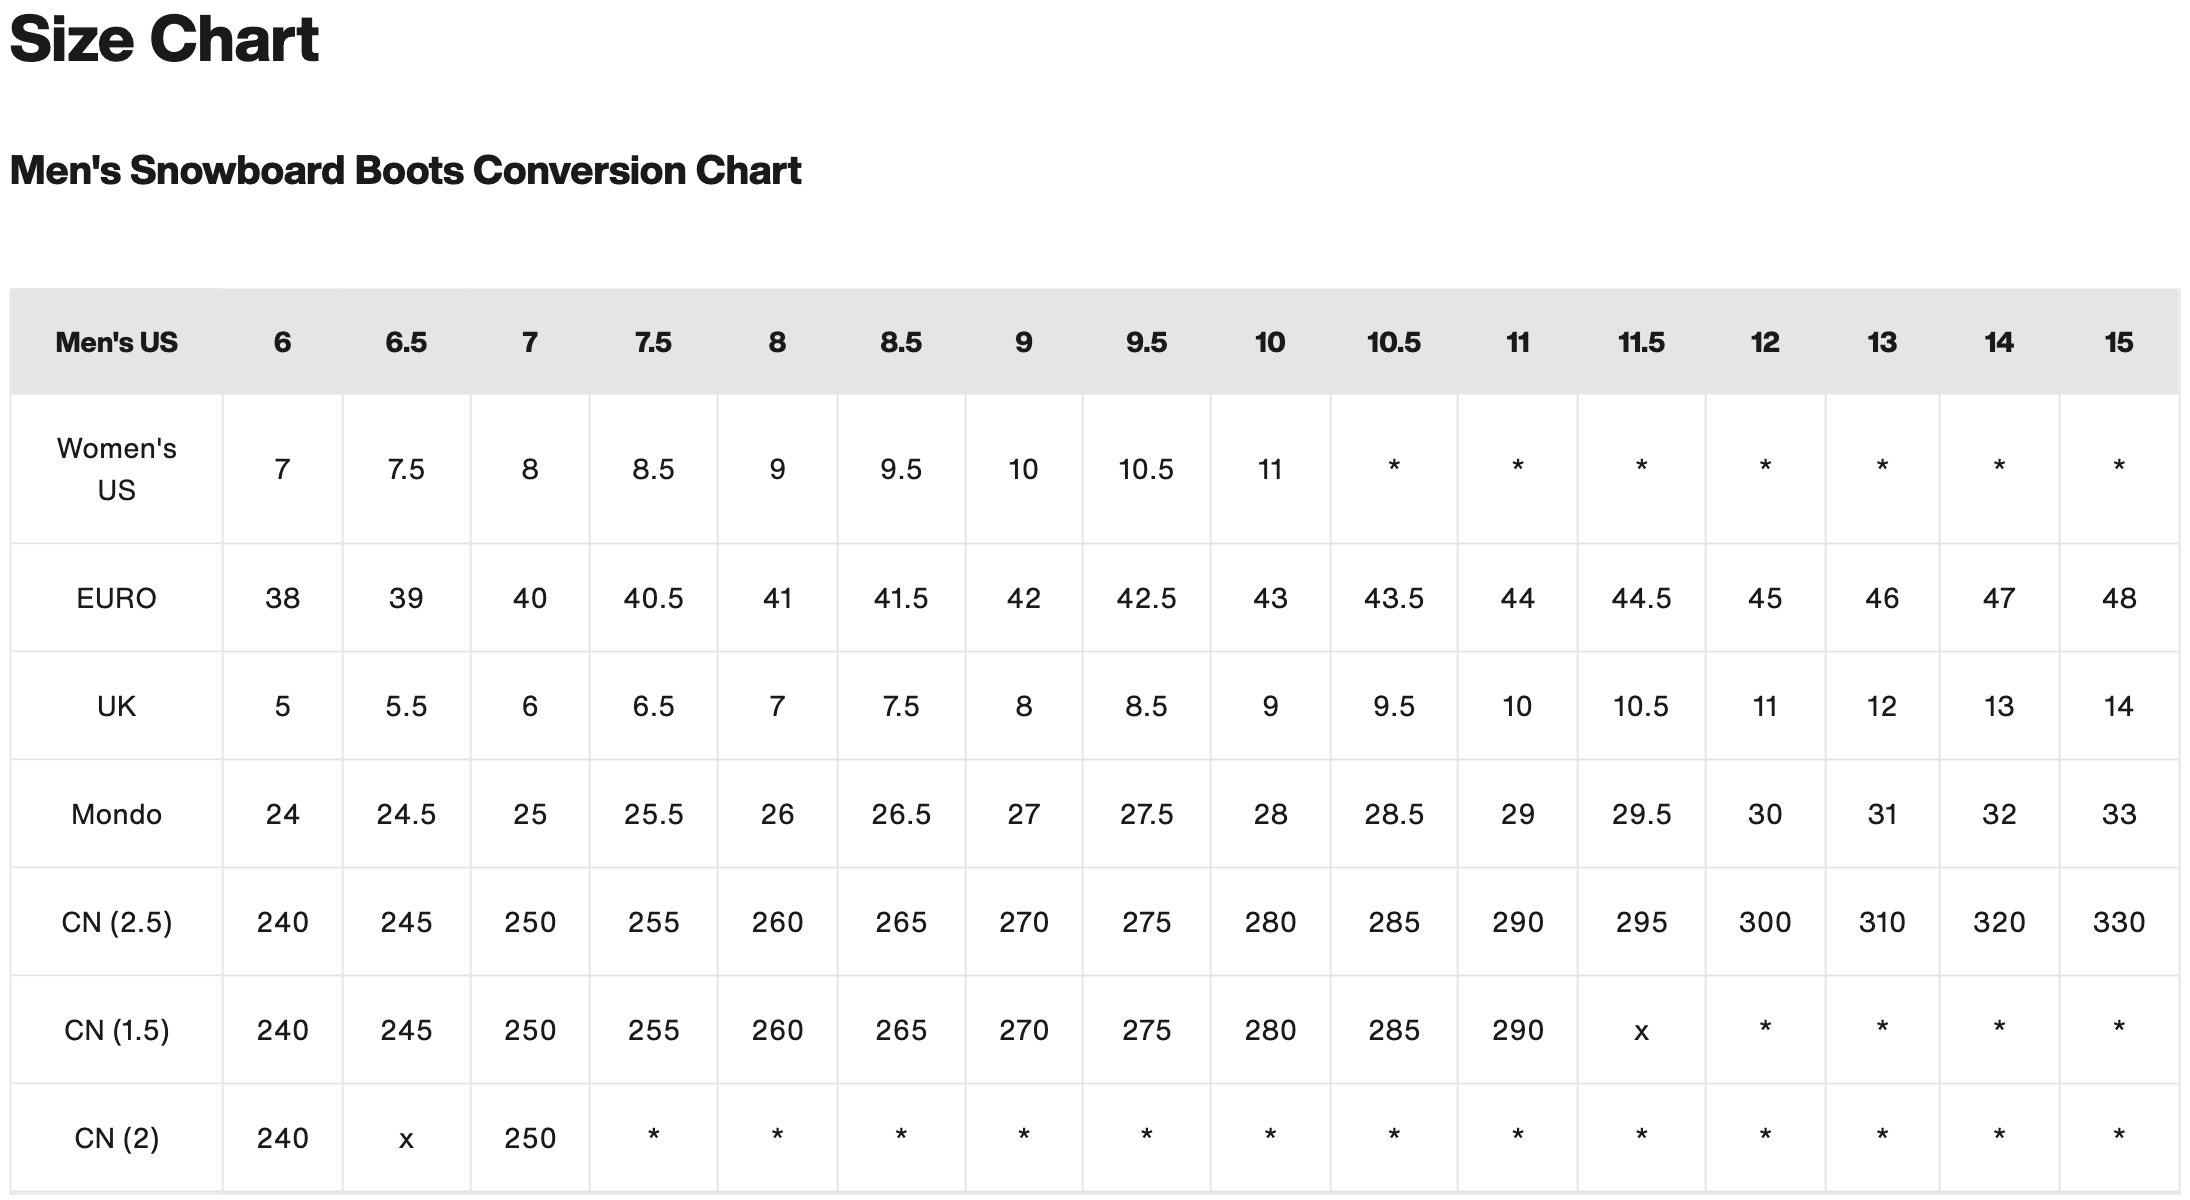 Men's Snowboard Boots Conversion Chart